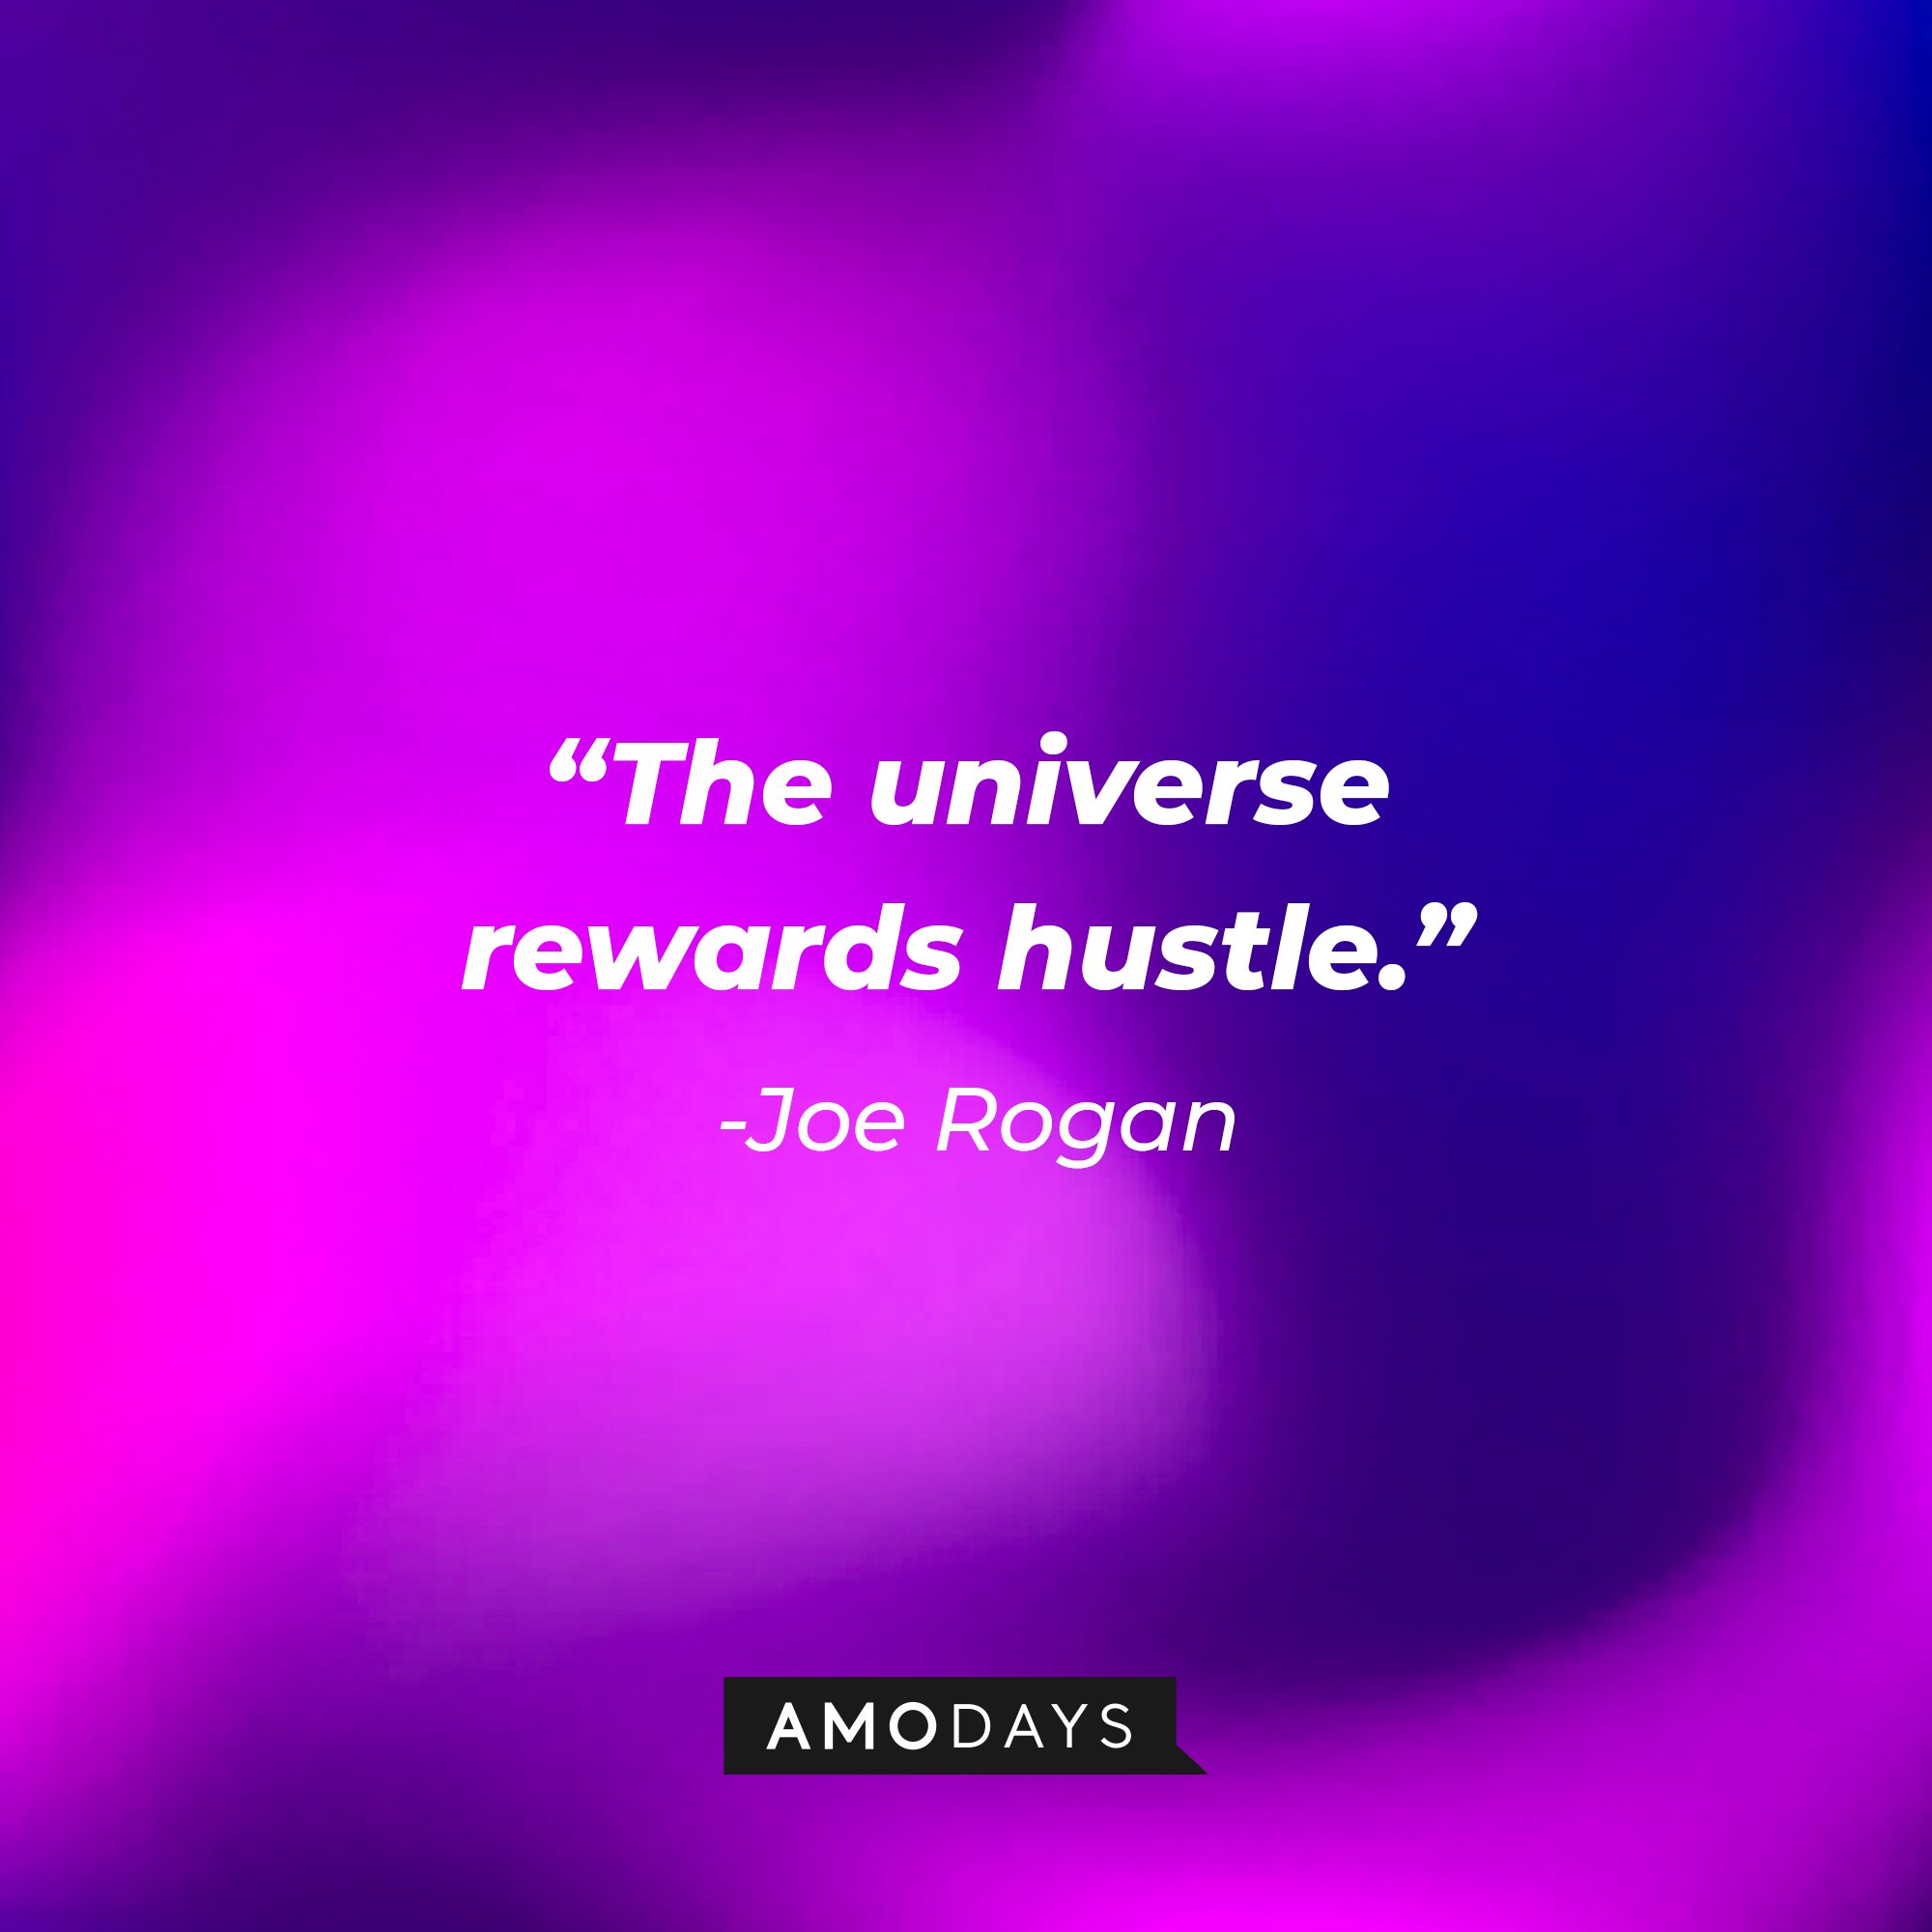 Joe Rogan's quote: "The universe rewards hustle." | Image: AmoDays